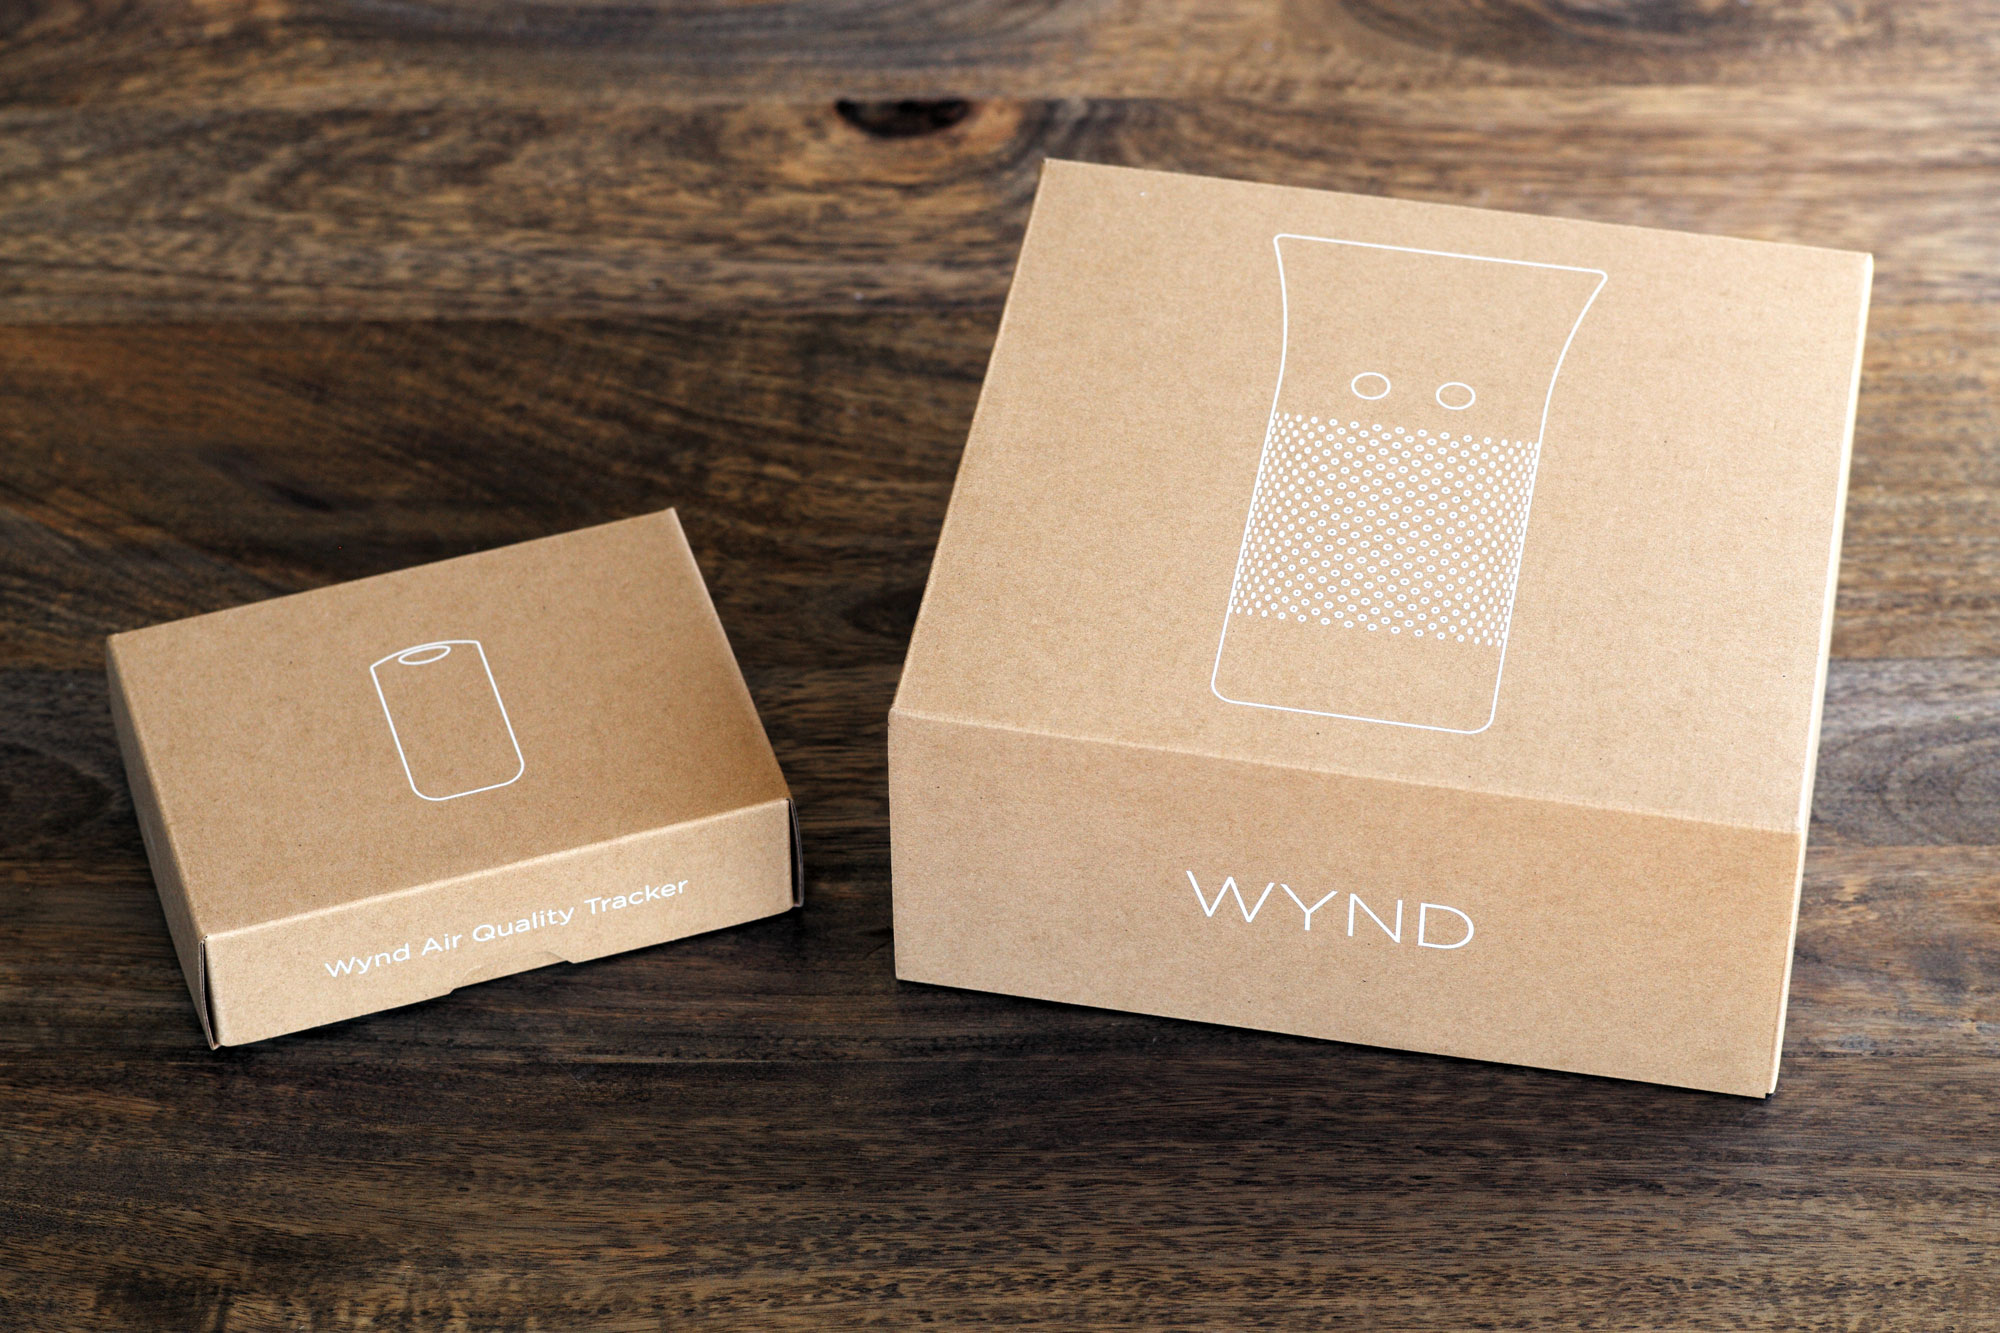 Wynd packaging